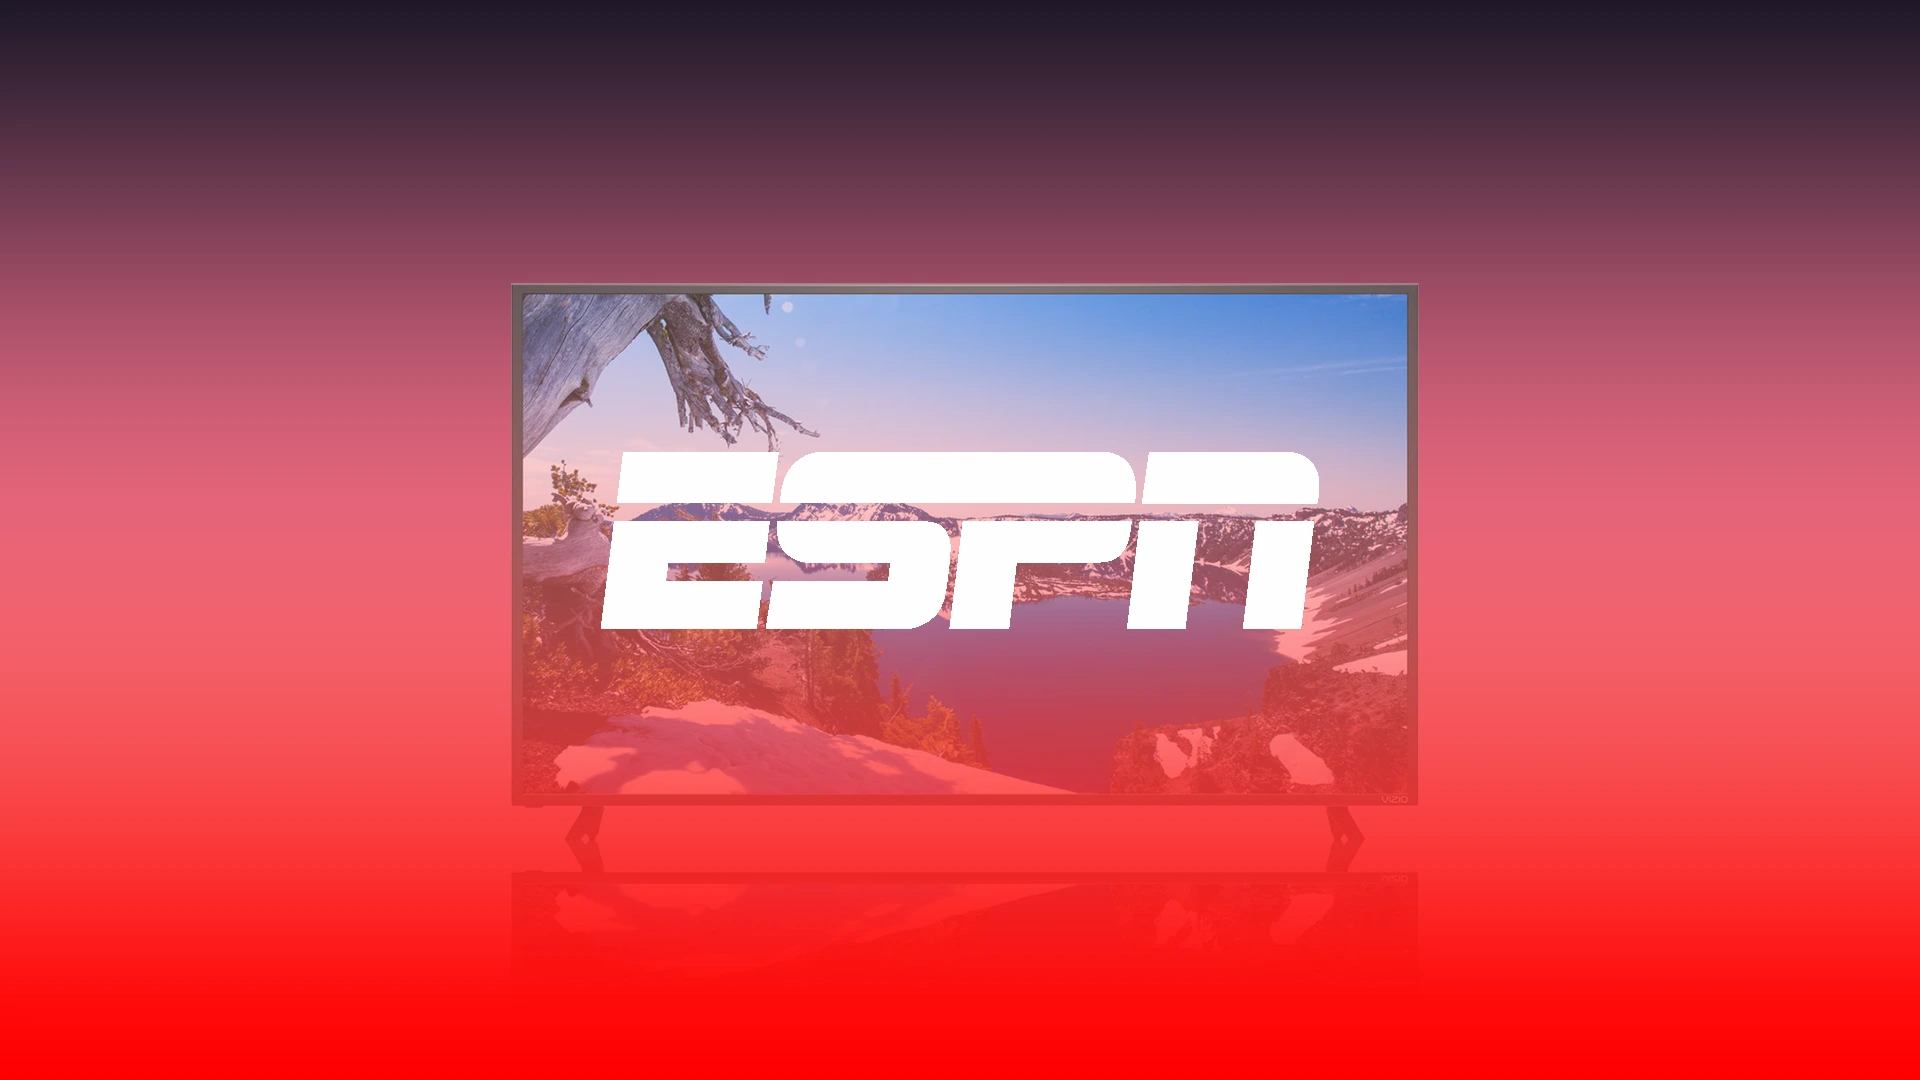 How to install ESPN app on Vizio TV